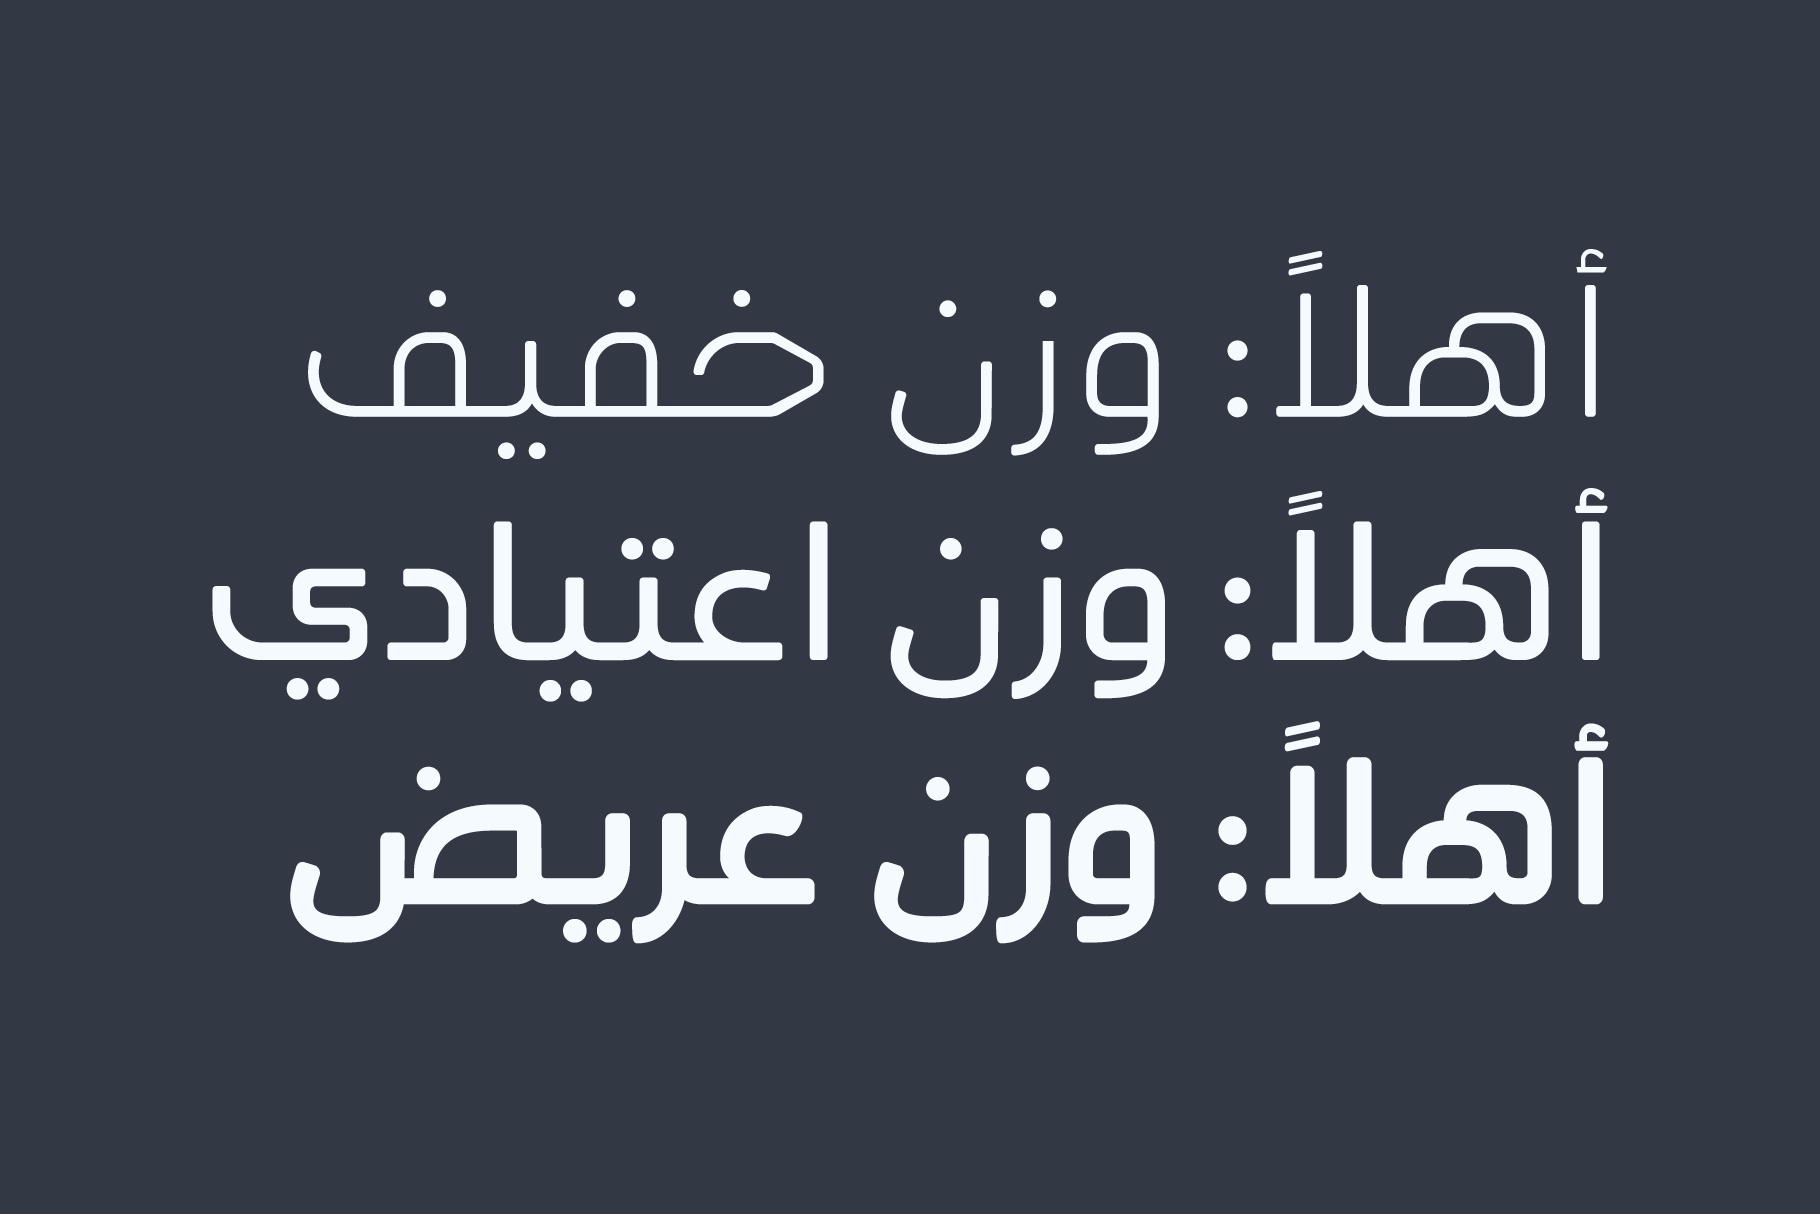 Ahlan - Arabic Typeface facebook image.